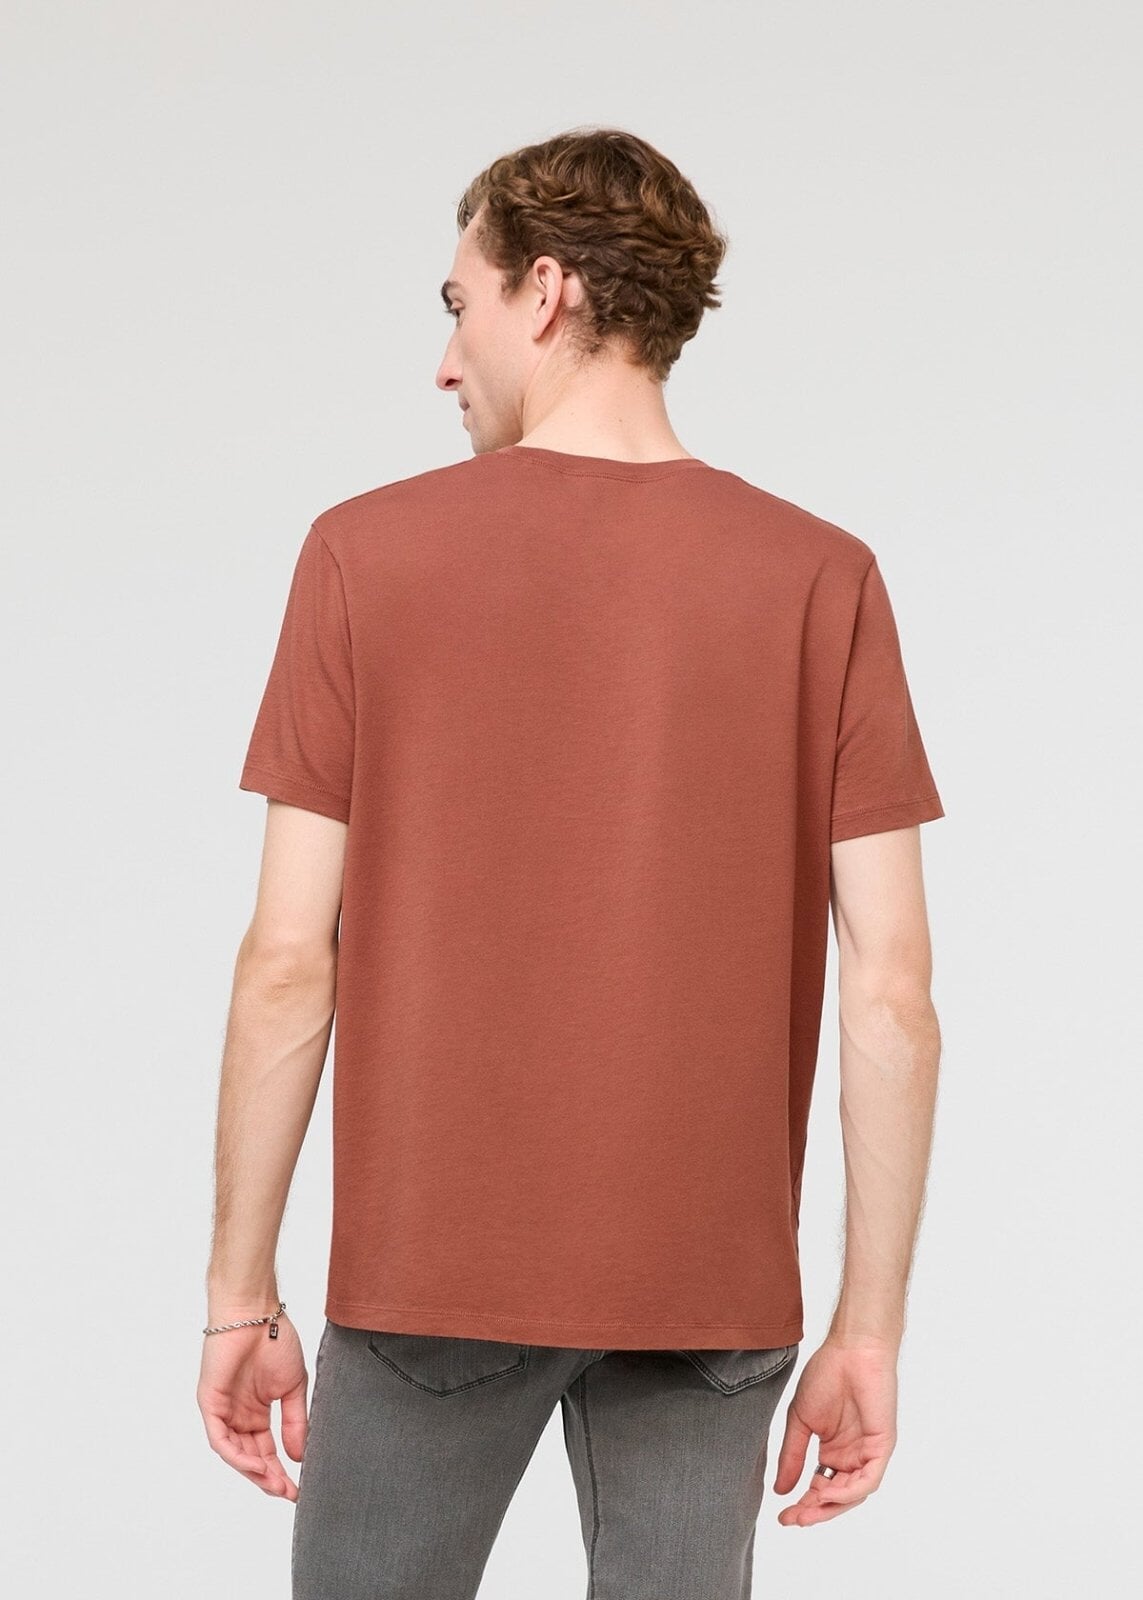 mens 100% Pima cotton rust t-shirt back